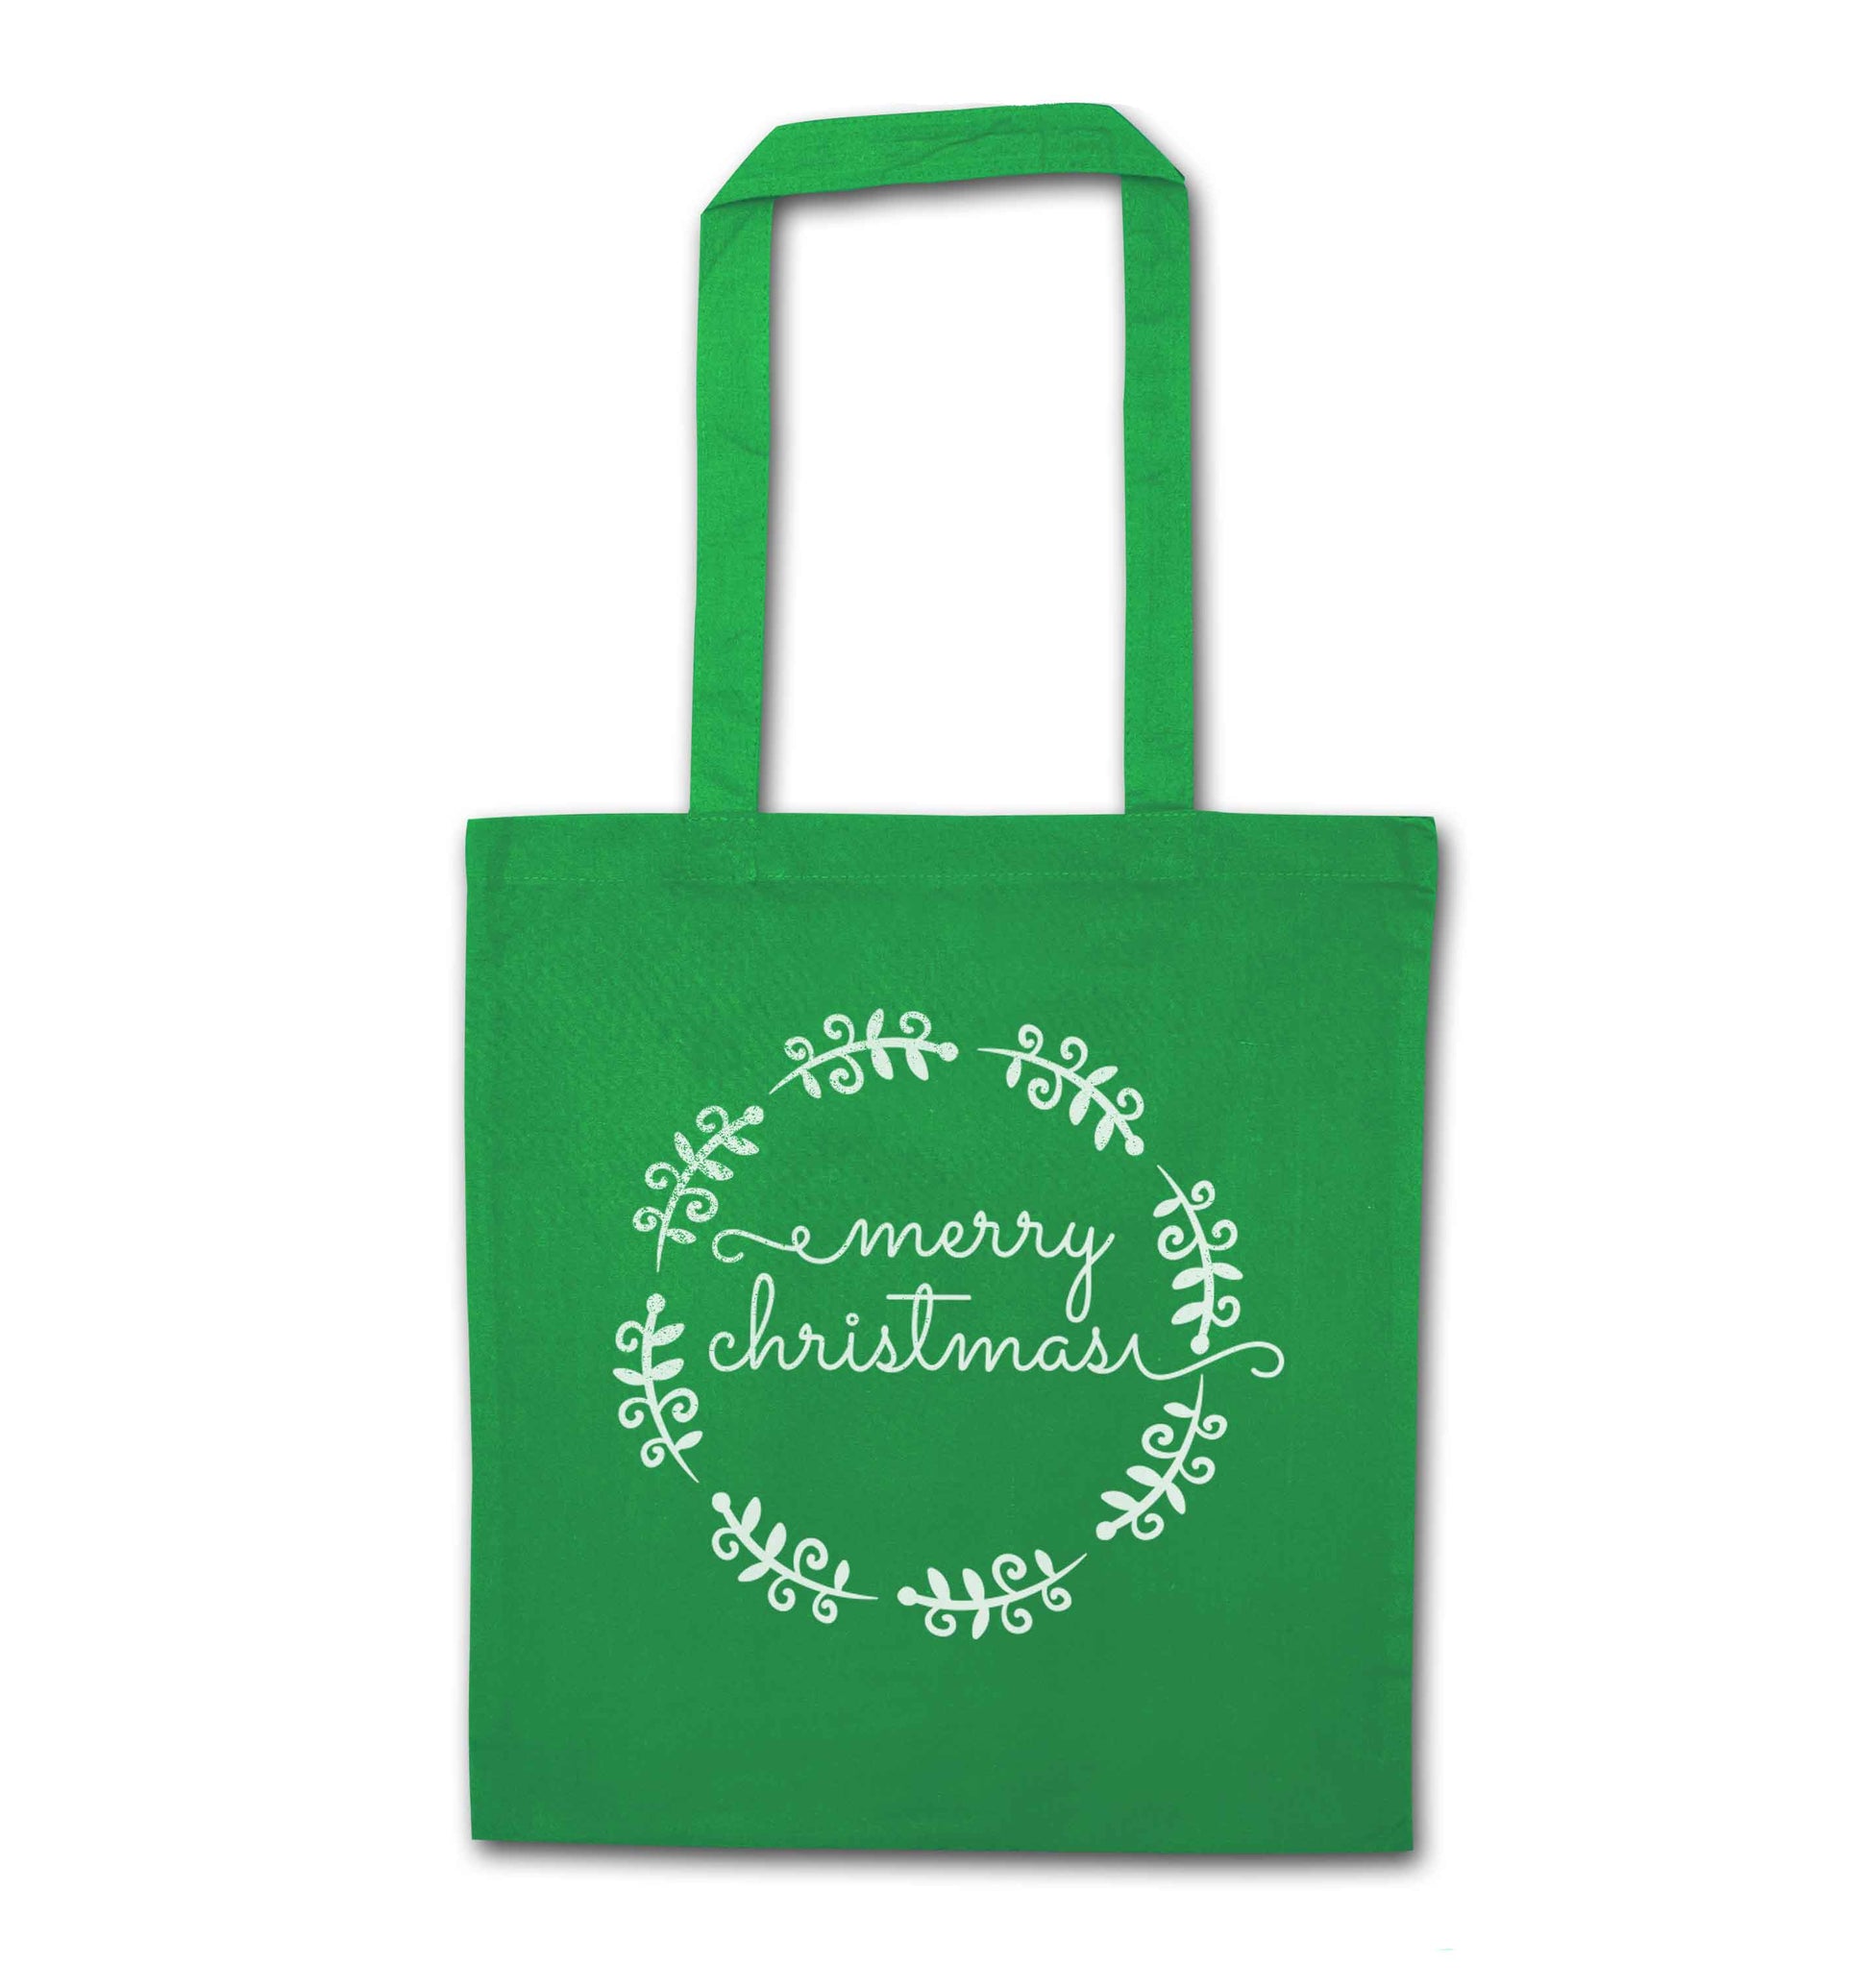 Merry christmas green tote bag